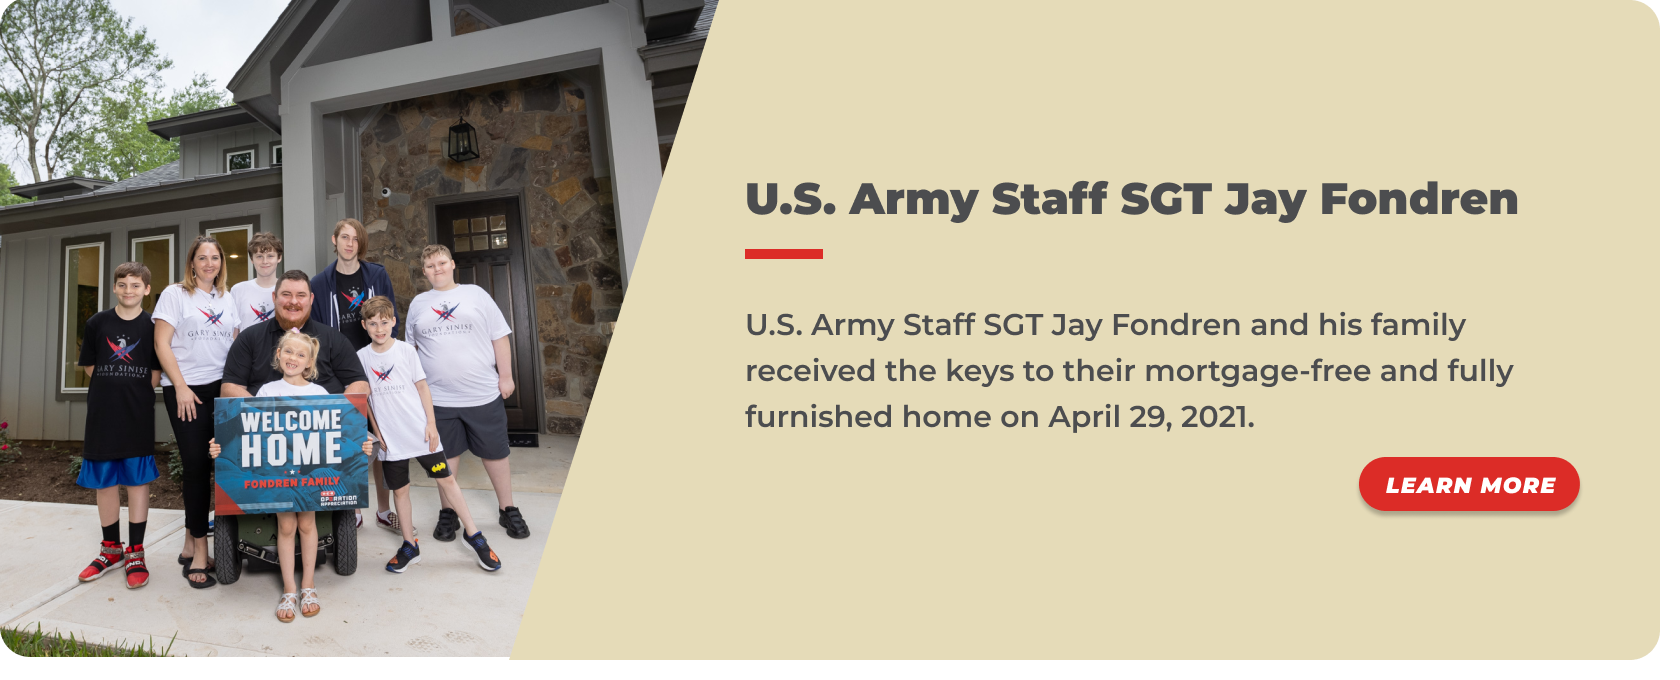 32 - U.S. Army Staff SGT Jay Fondren